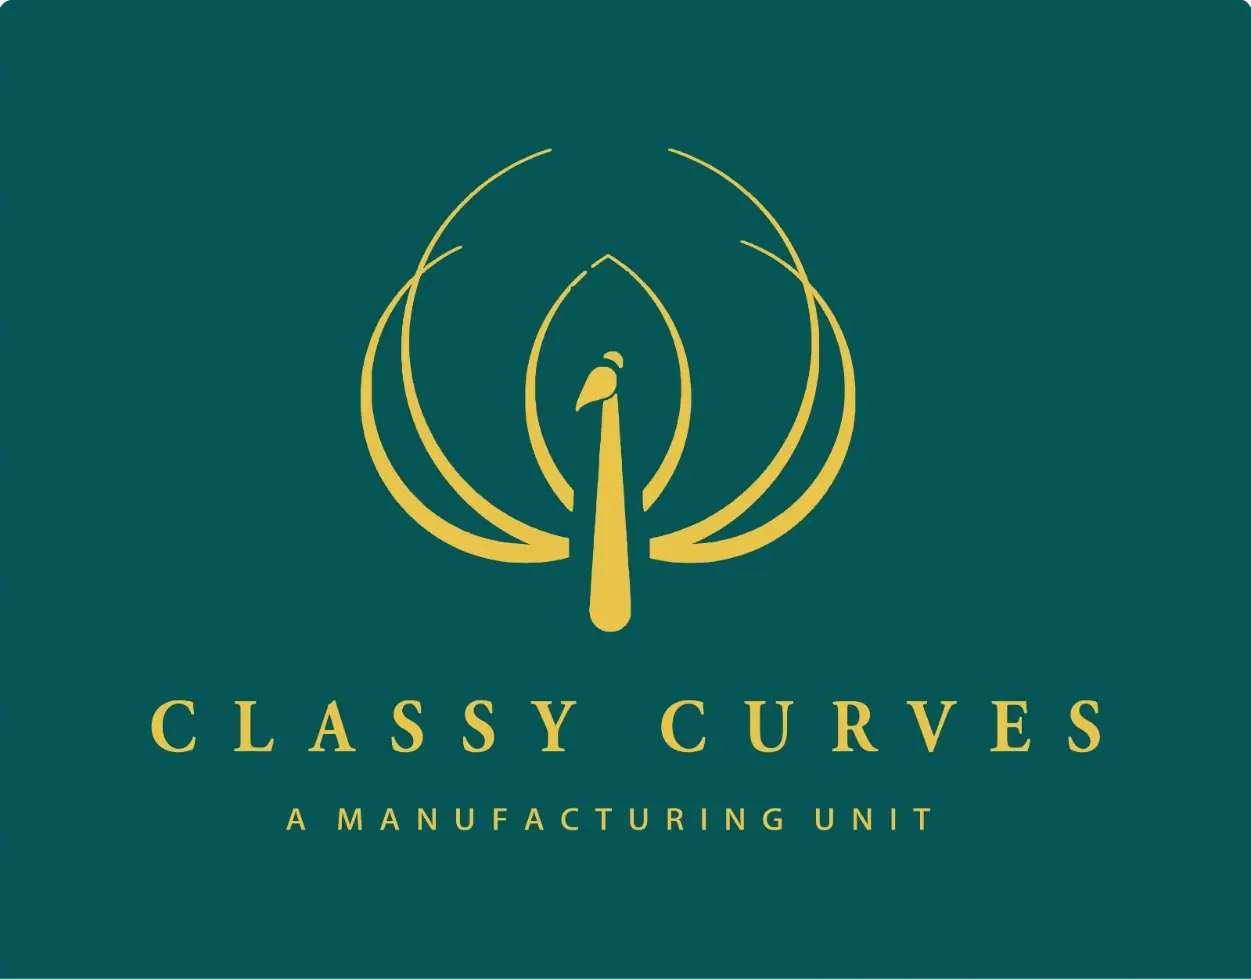 Classy curve